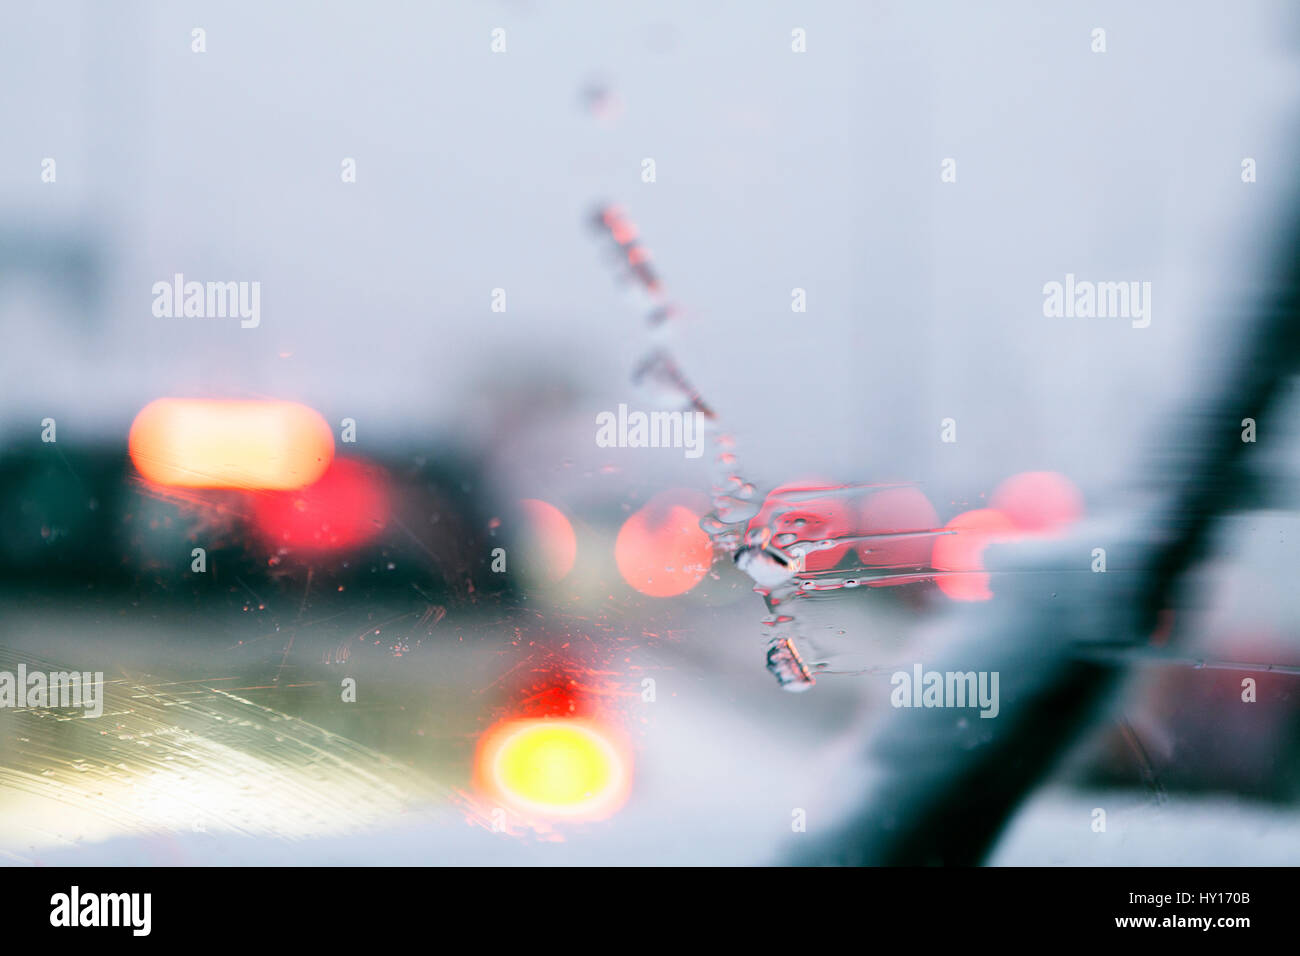 Sweden, Car traffic as seen through wet window car Stock Photo